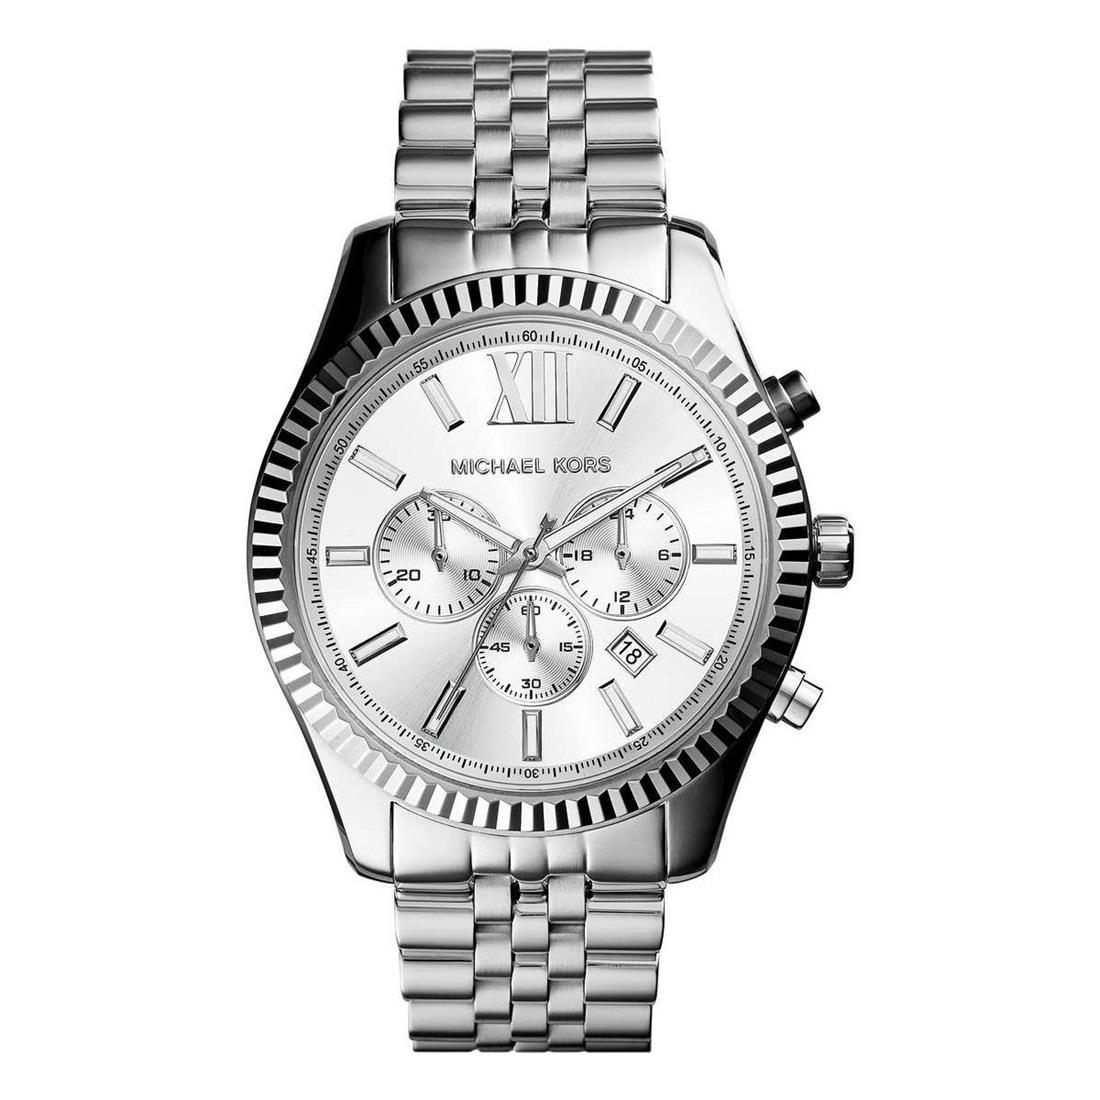 Men's watch in stainless steel, 45mm case - MICHAEL KORS